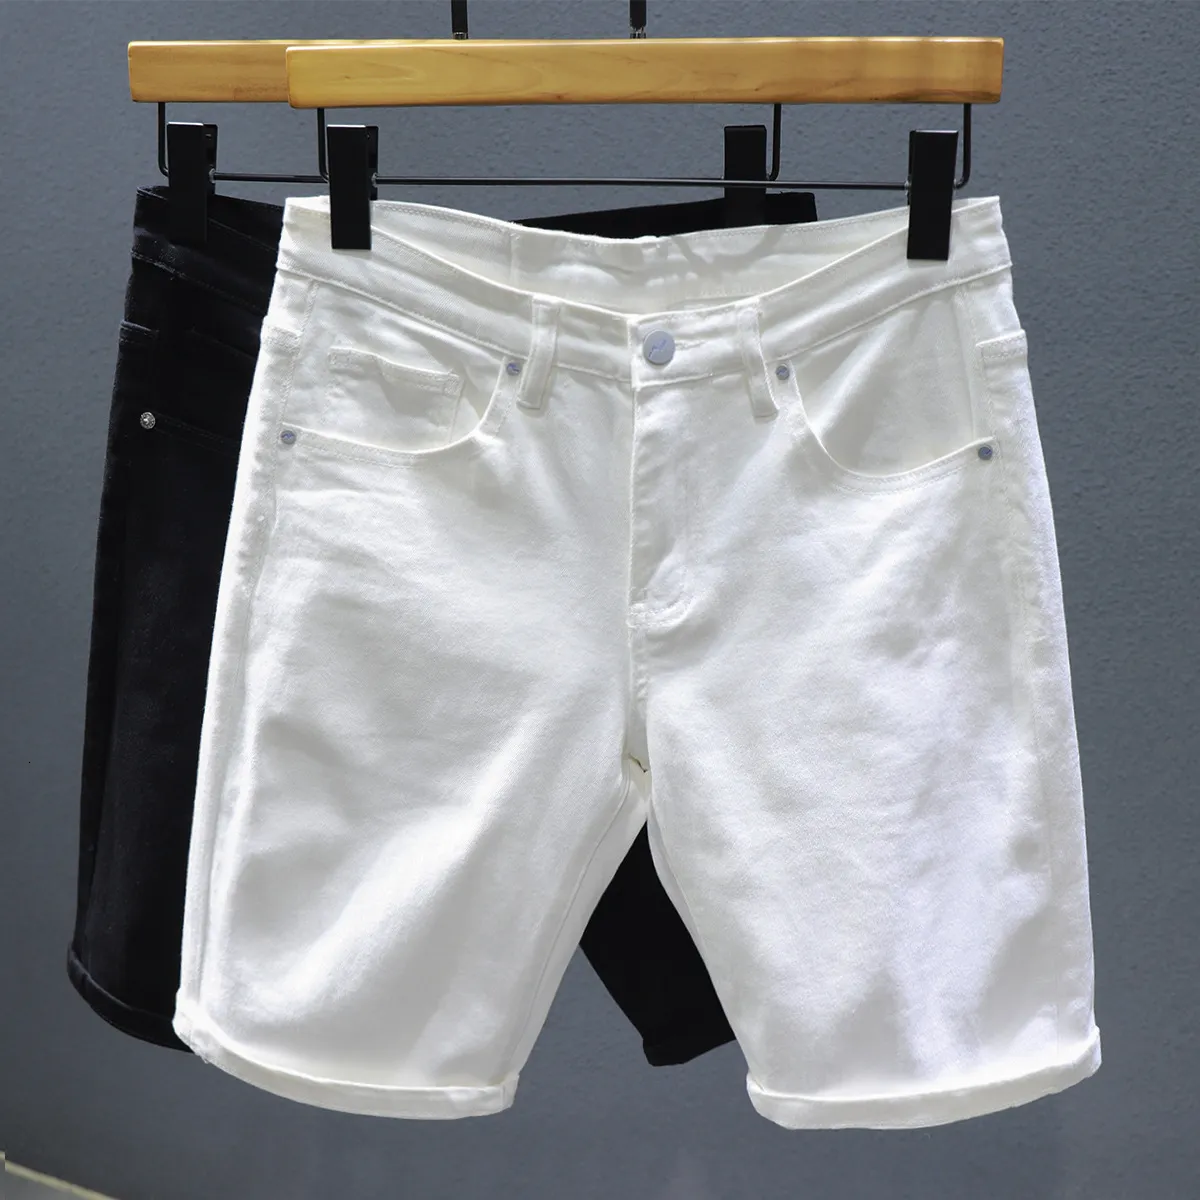 شورت الرجال الكلاسيكية البيضاء Balck Denim Shorts Summer Thin Corean Trend Trend Straight-Strain-Length-Fengous Fenge Bants Salting Jeans Jeans 230417